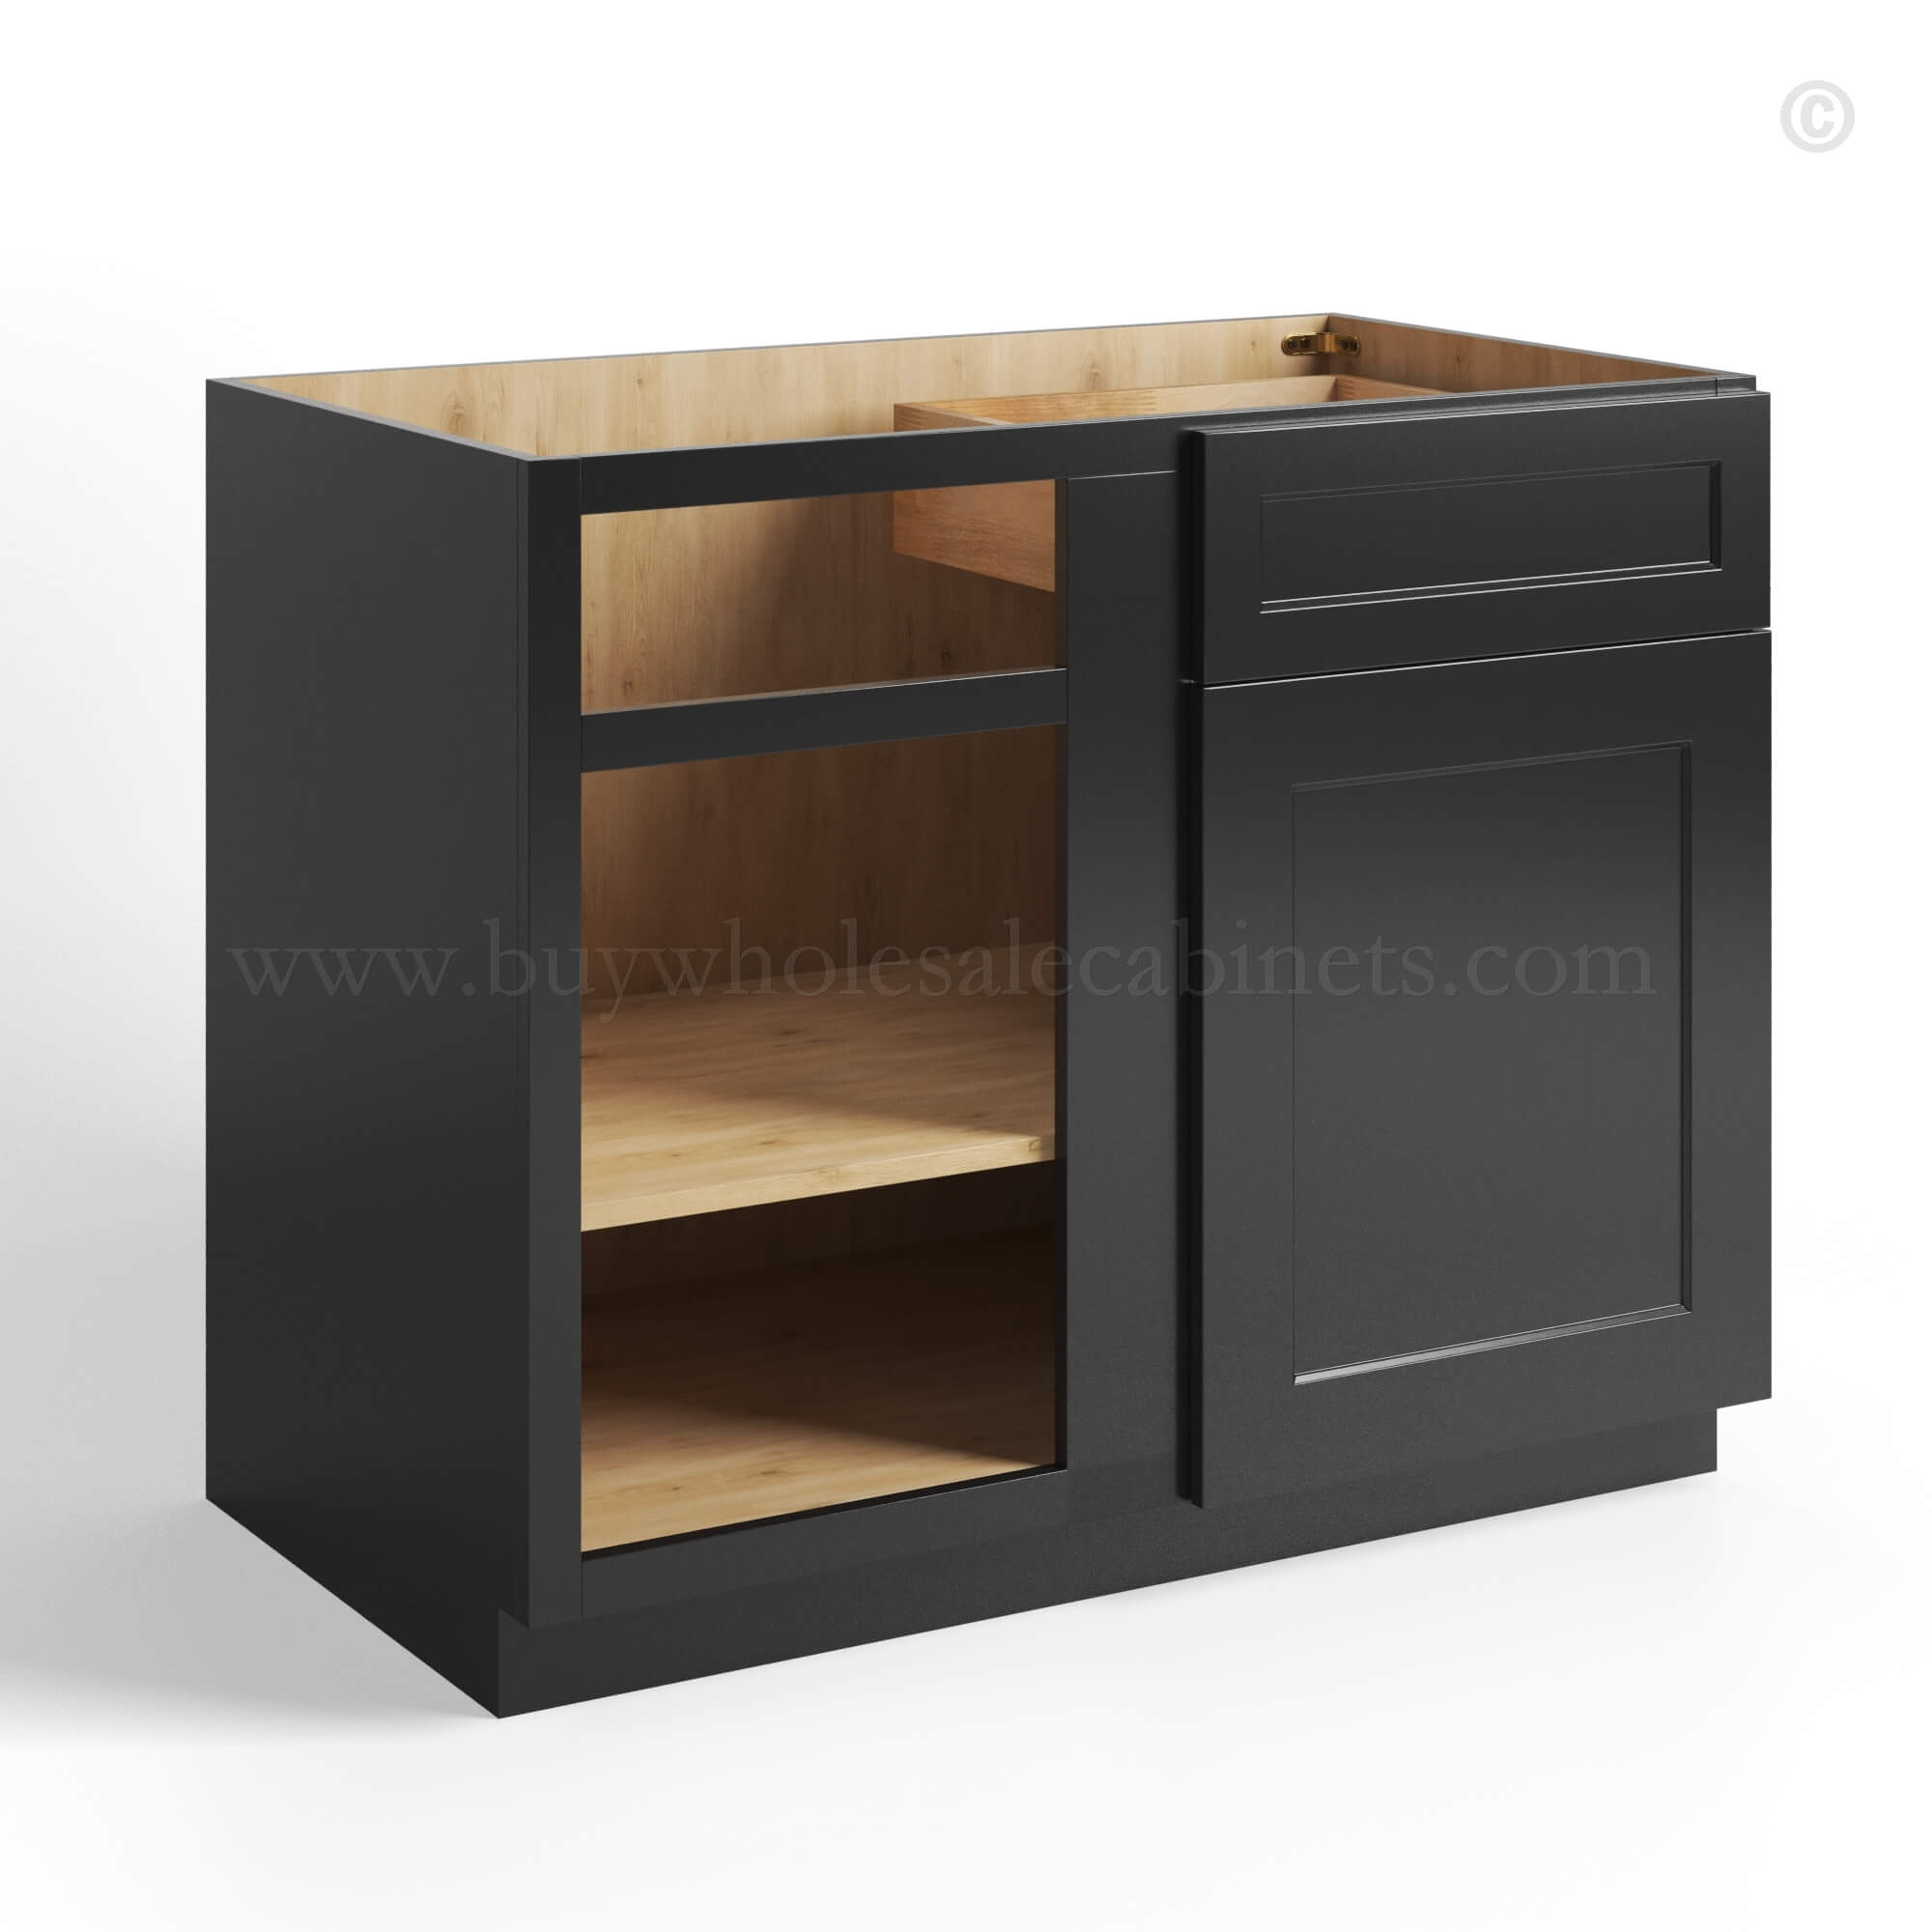 Black Shaker Base Blind Corner Cabinet, rta cabinets, wholesale cabinets